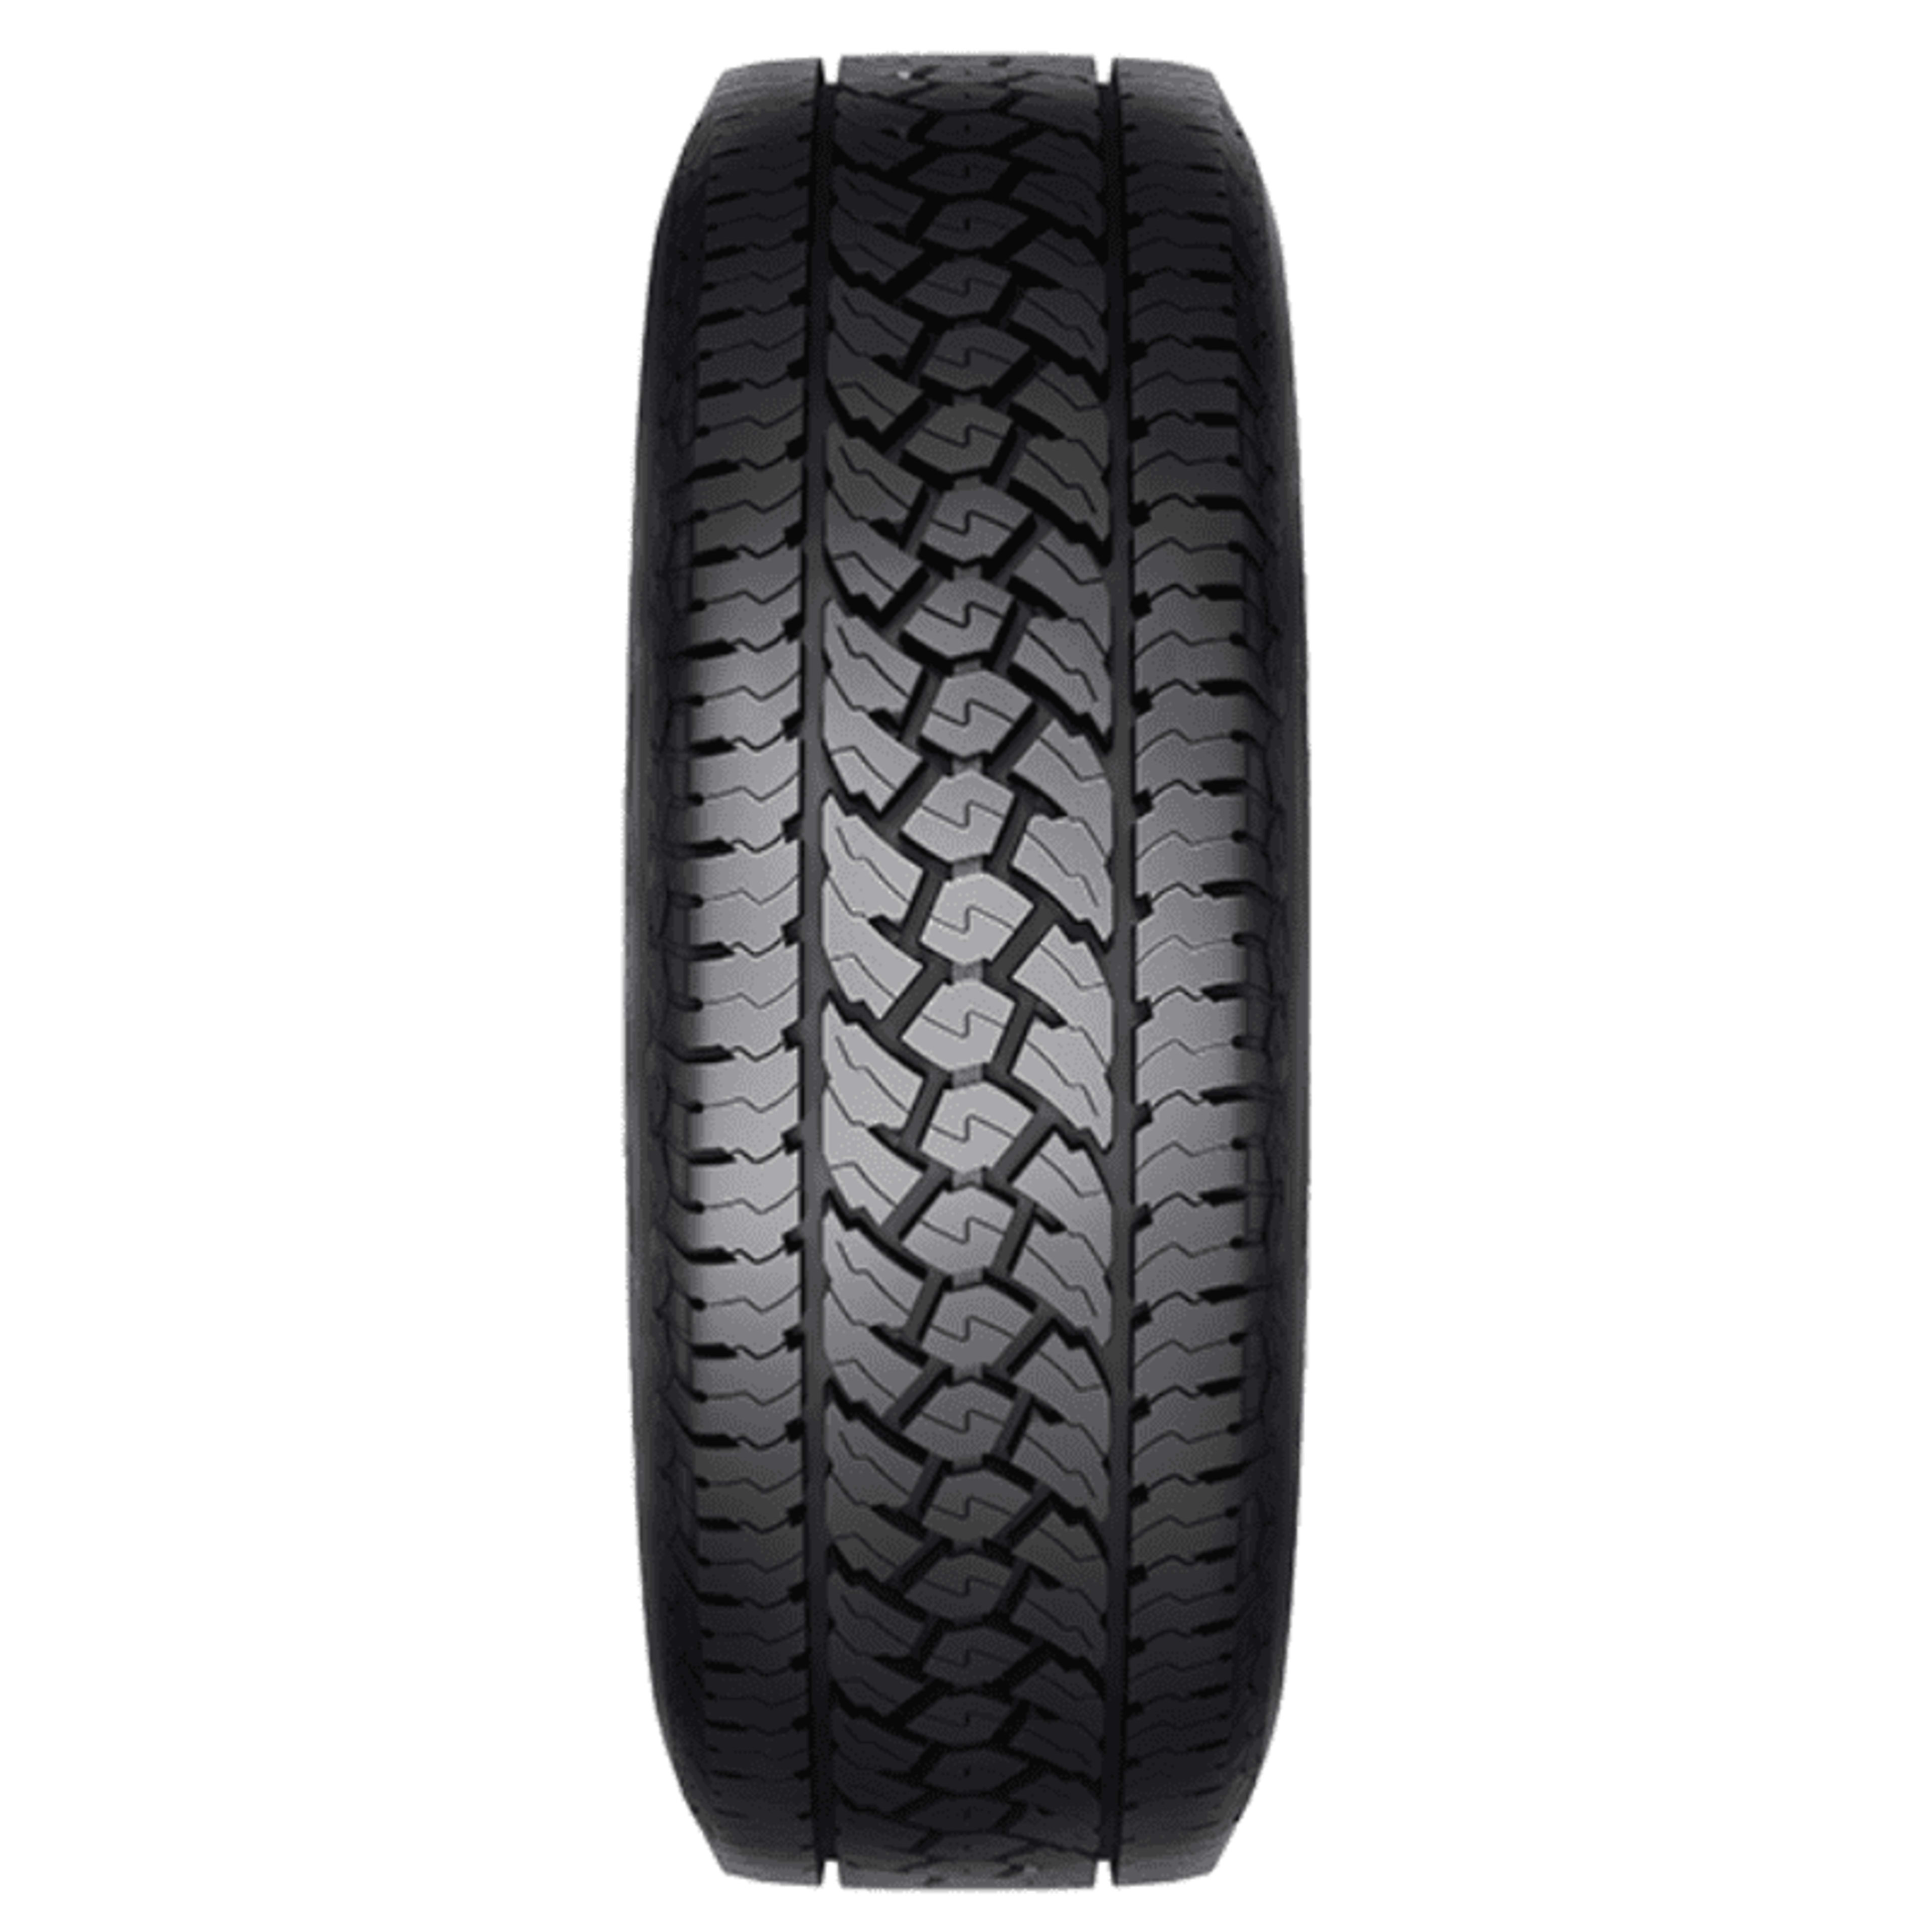 Buy Goodyear Wrangler SilentTrac Tires Online | SimpleTire